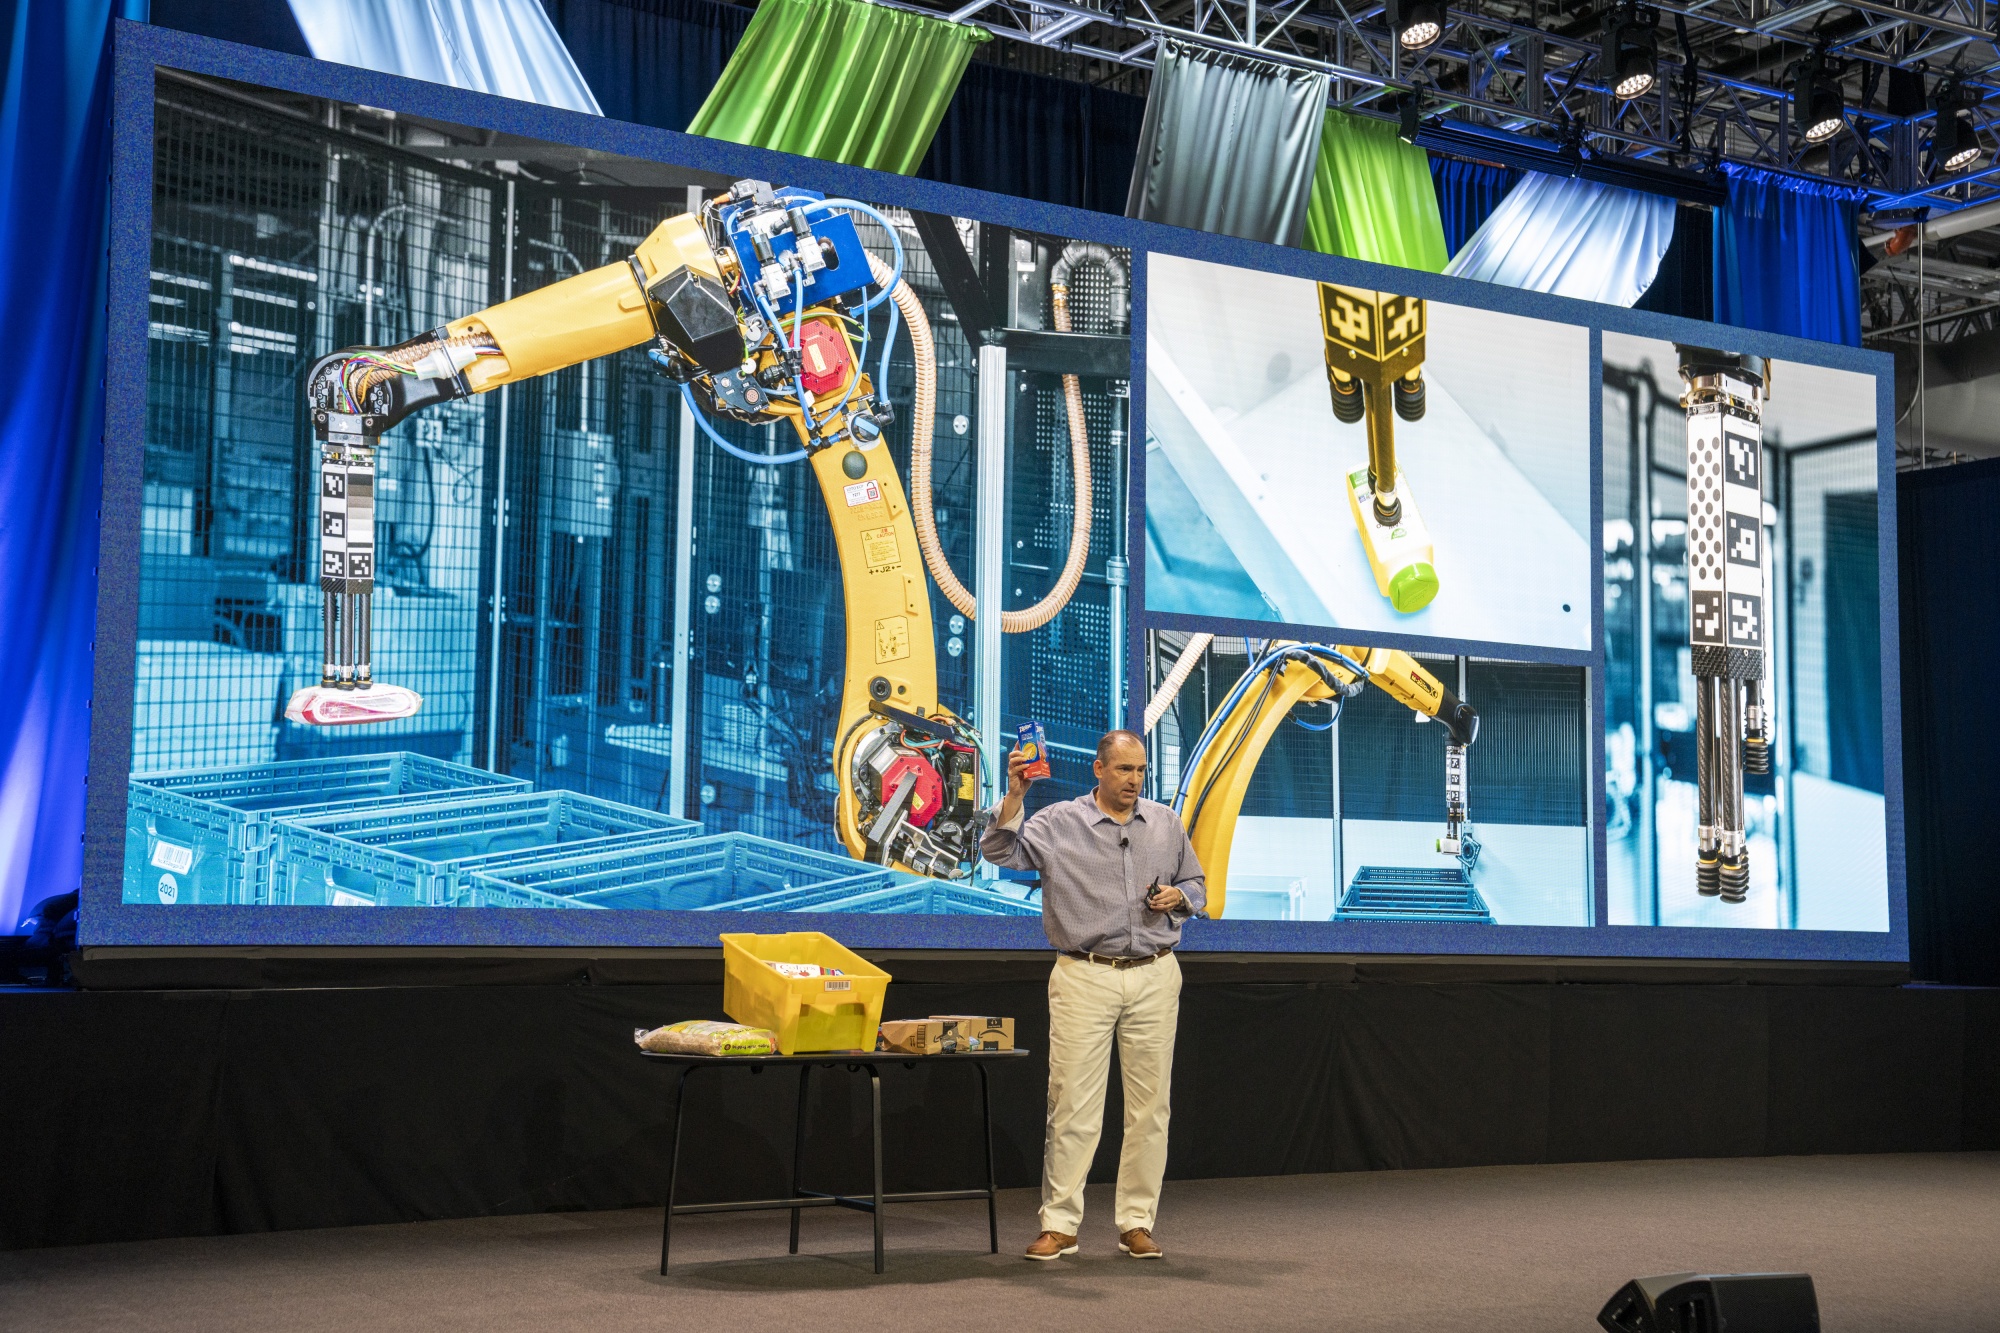 Inside the Delicate Mechanics of Marketing Mr. Robot's Second Season